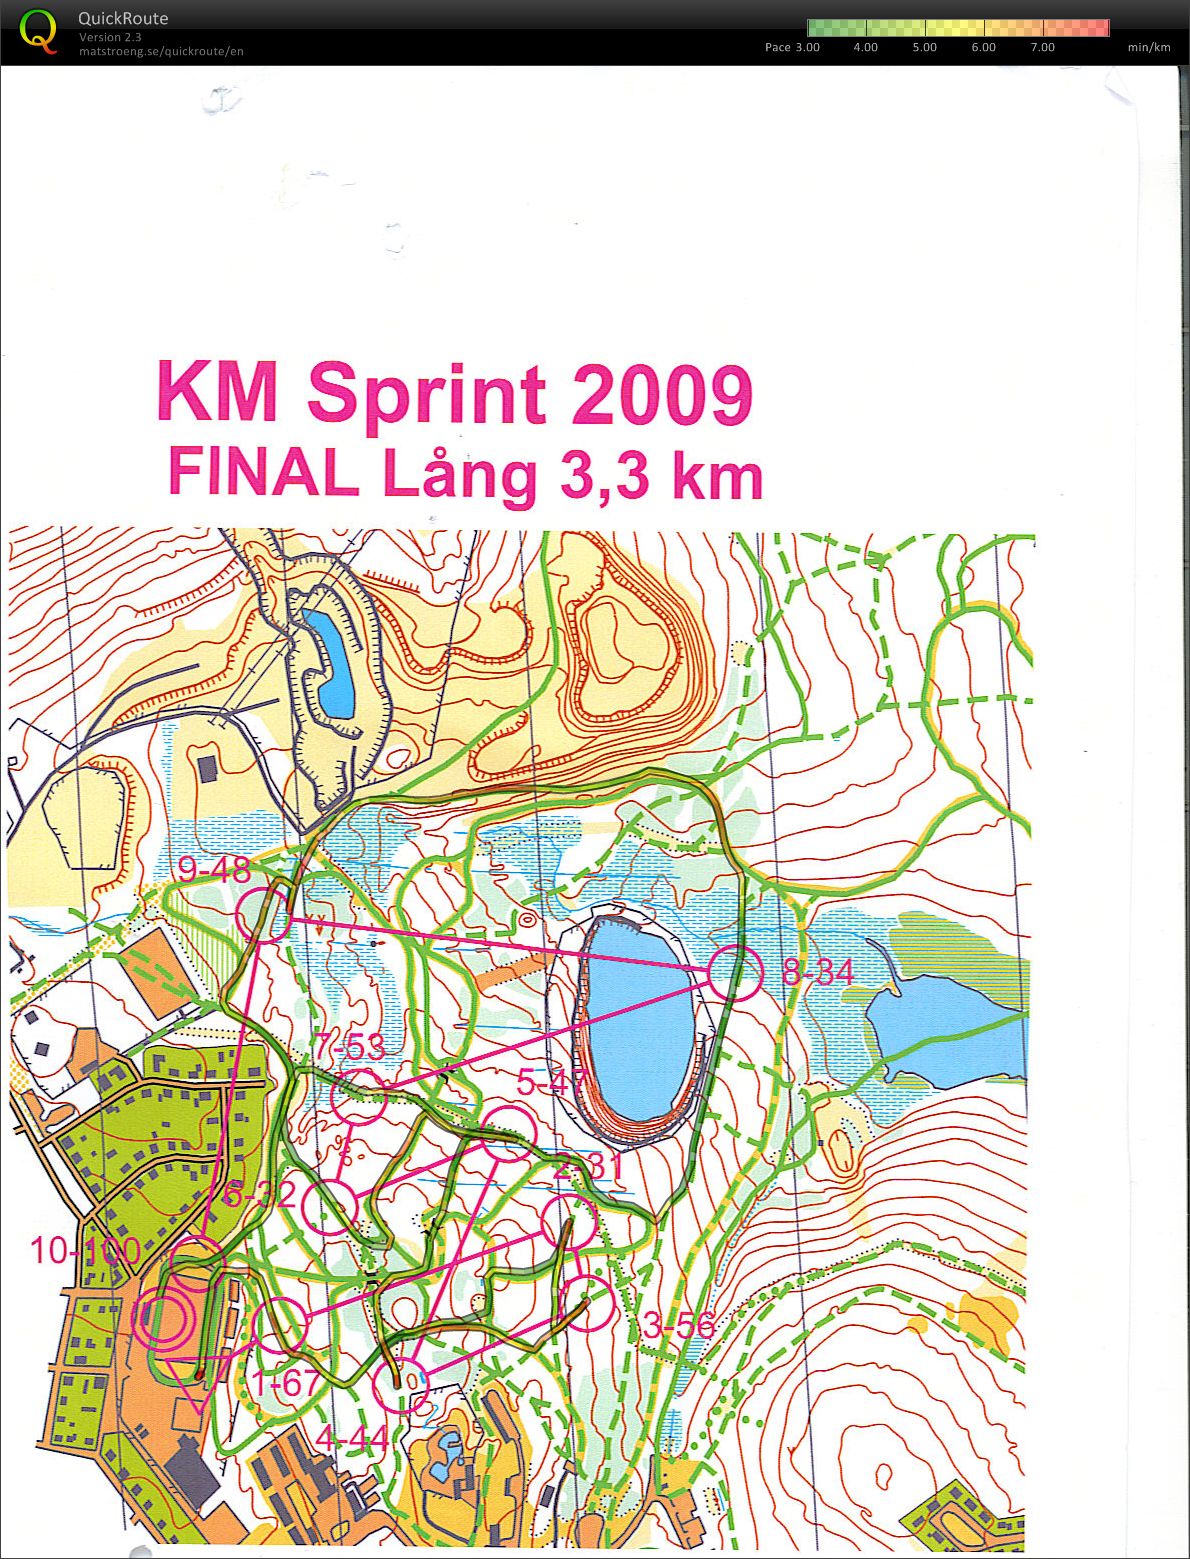 SkiO Sprint-KM Final (27/12/2009)